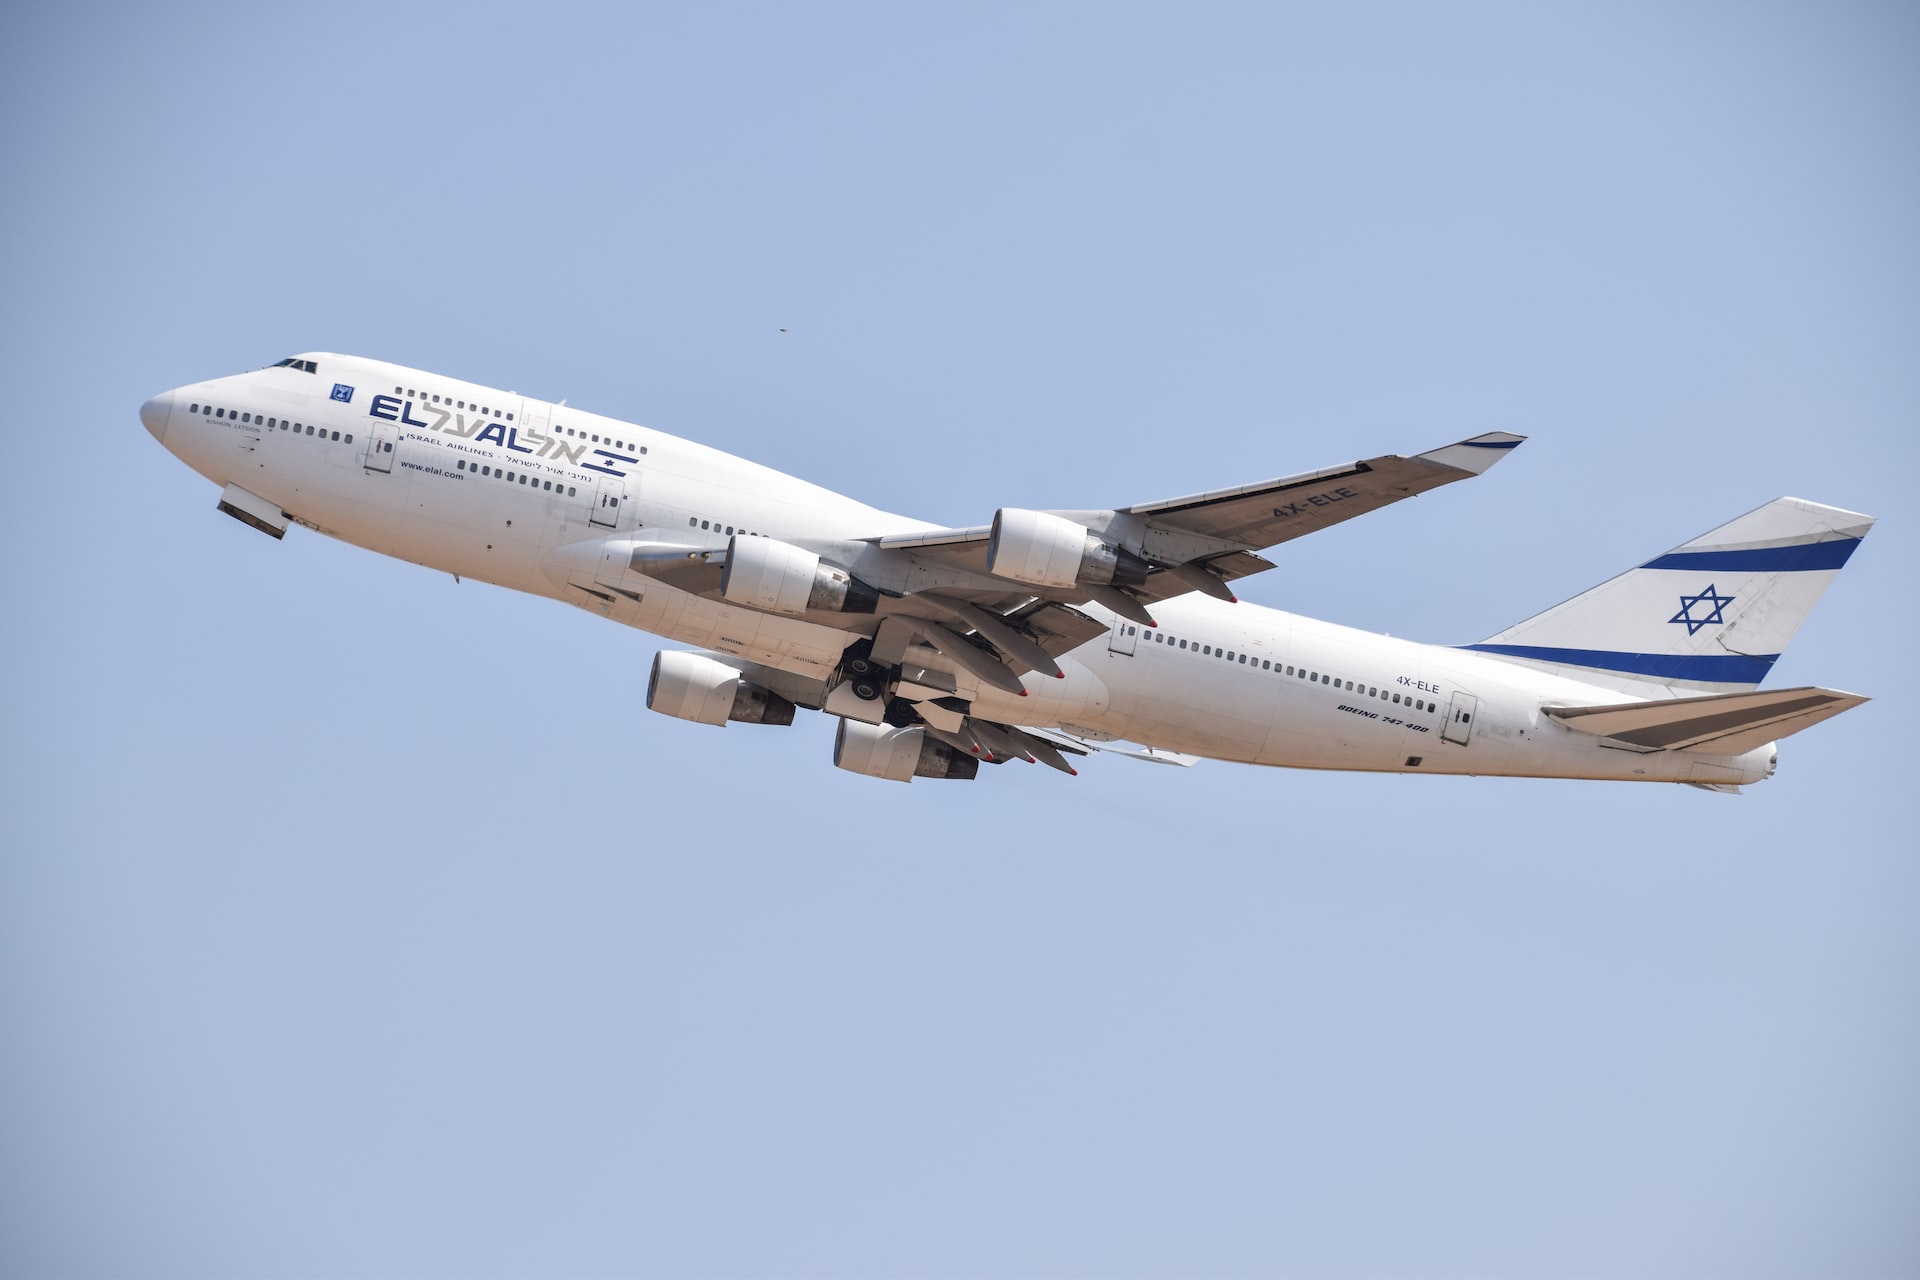 El Al Boeing 747 taking off from Ben Gurion Airport in Israel